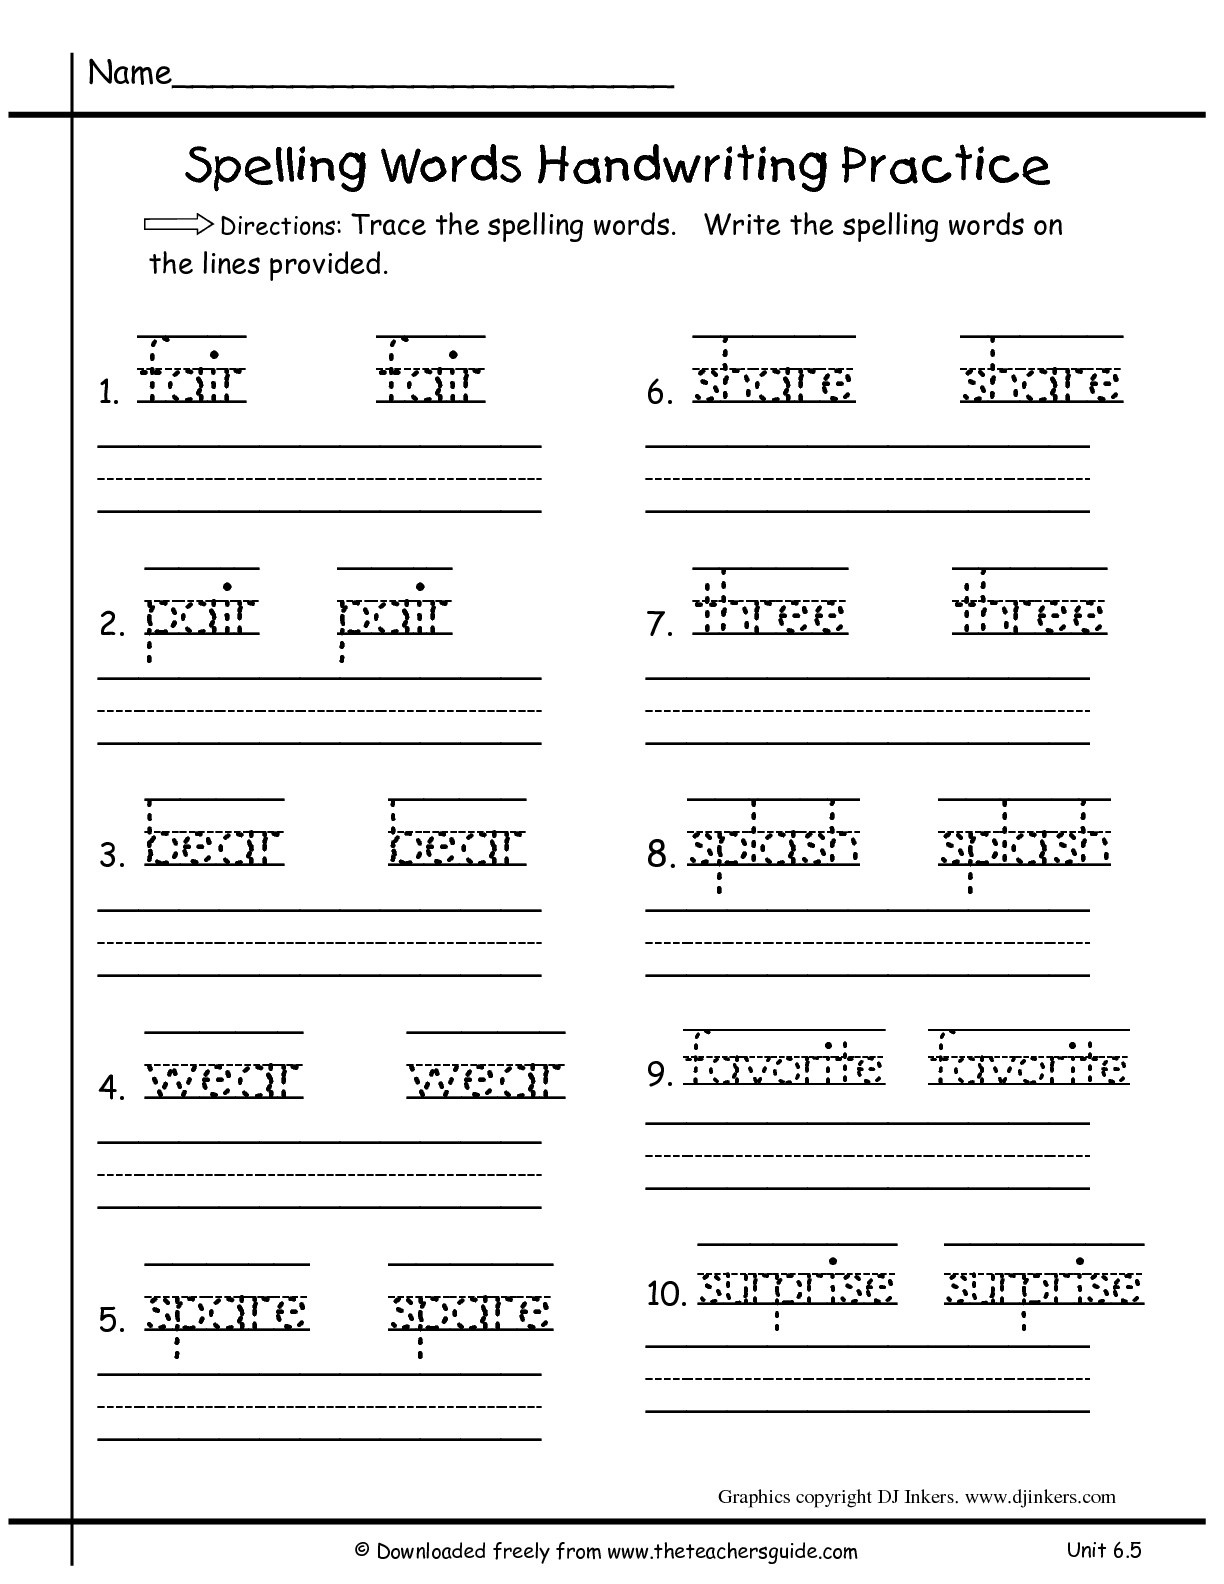 1St Grade Language Arts Worksheets To Free Download - Math Worksheet - Free Printable Worksheets For 1St Grade Language Arts